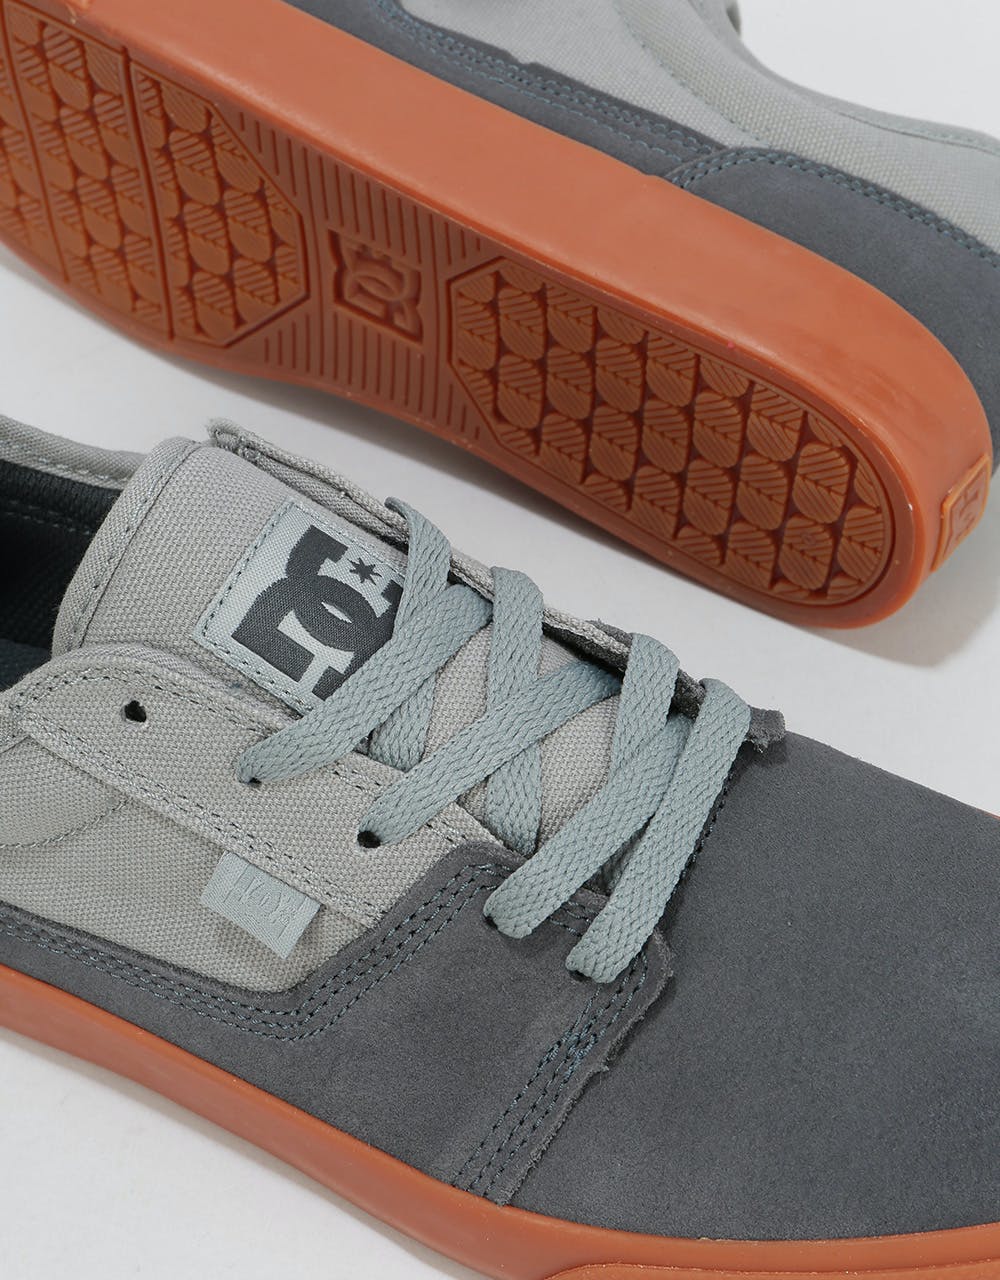 DC Tonik Skate Shoes - Grey/Light Grey